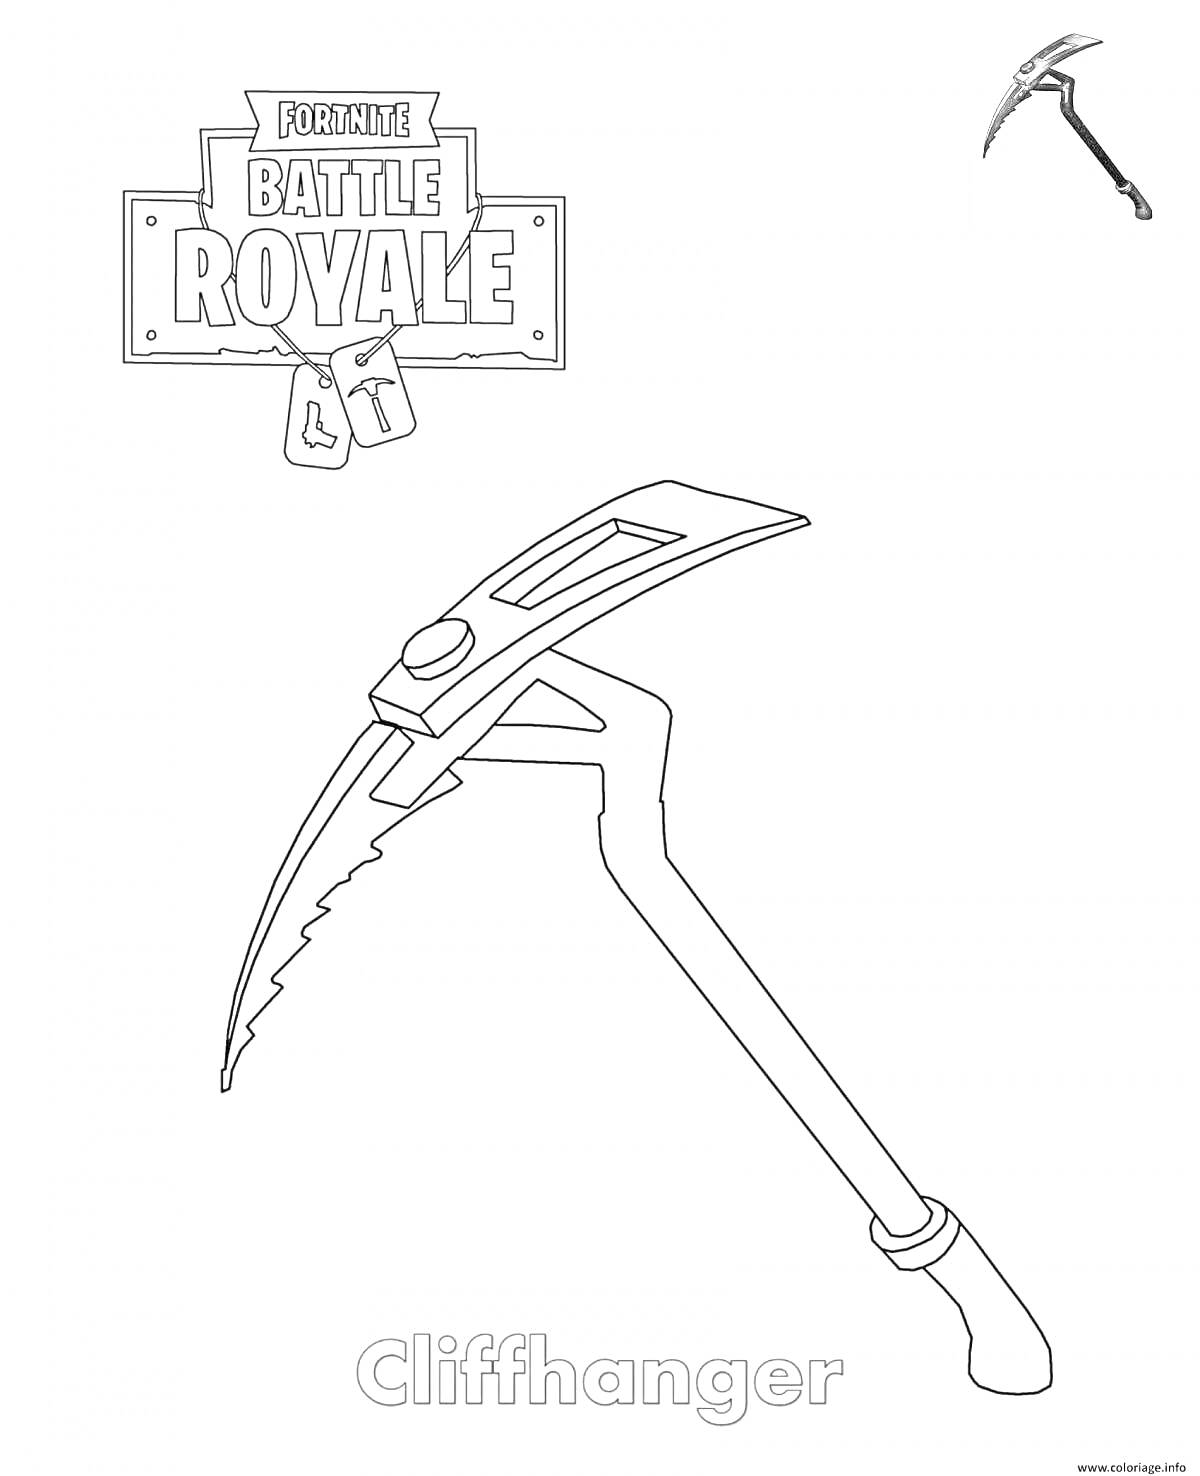 На раскраске изображено: Кирка, Fortnite, Battle Royale, Инструмент, Игровой предмет